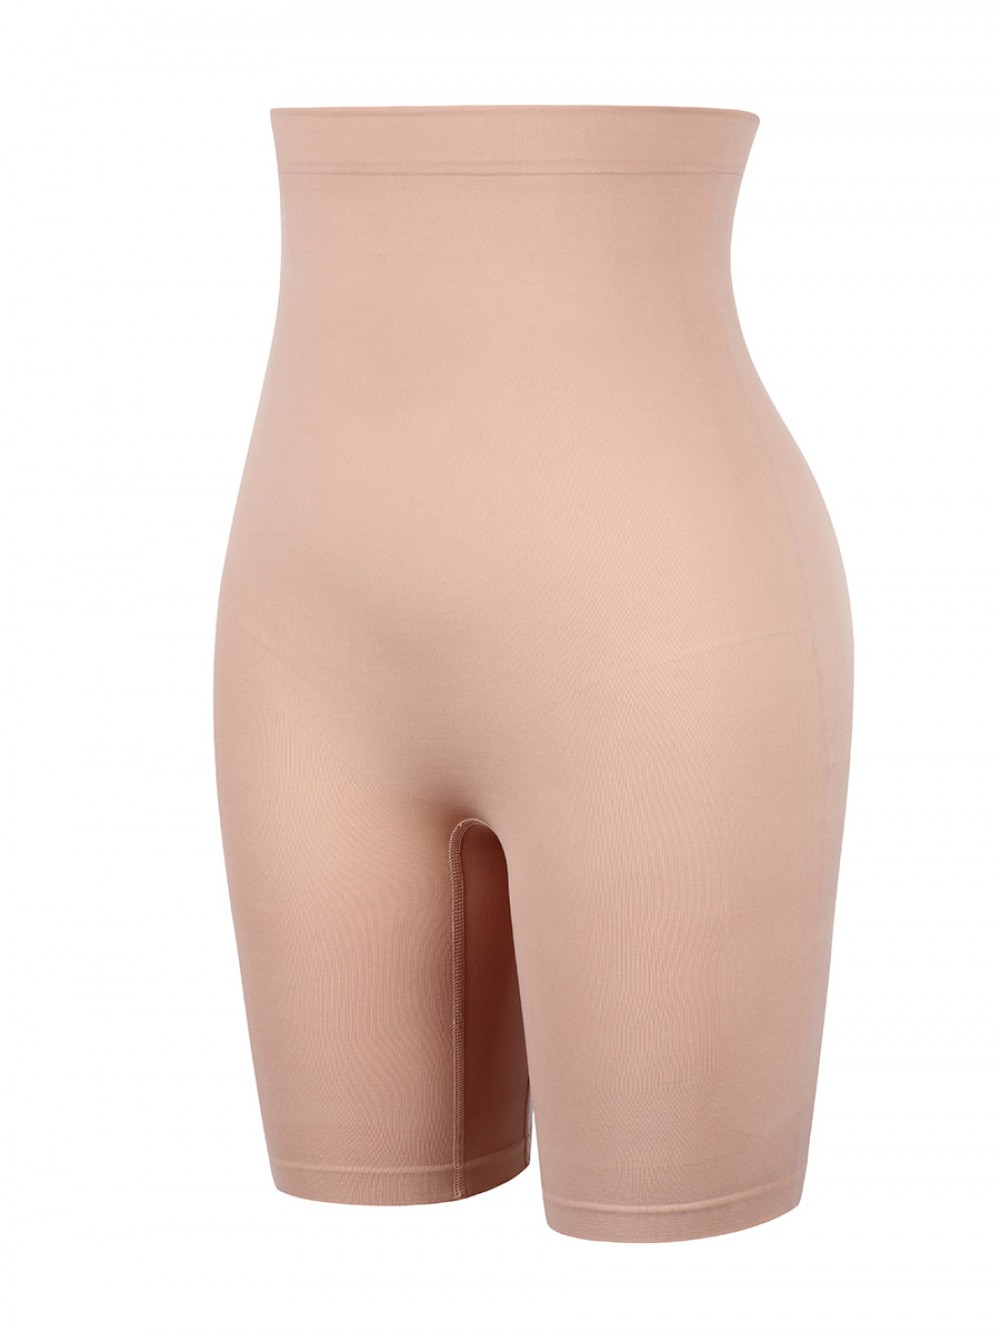 Nude Seamless Butt Lifter Shorts Anti-Slip Elastic Material